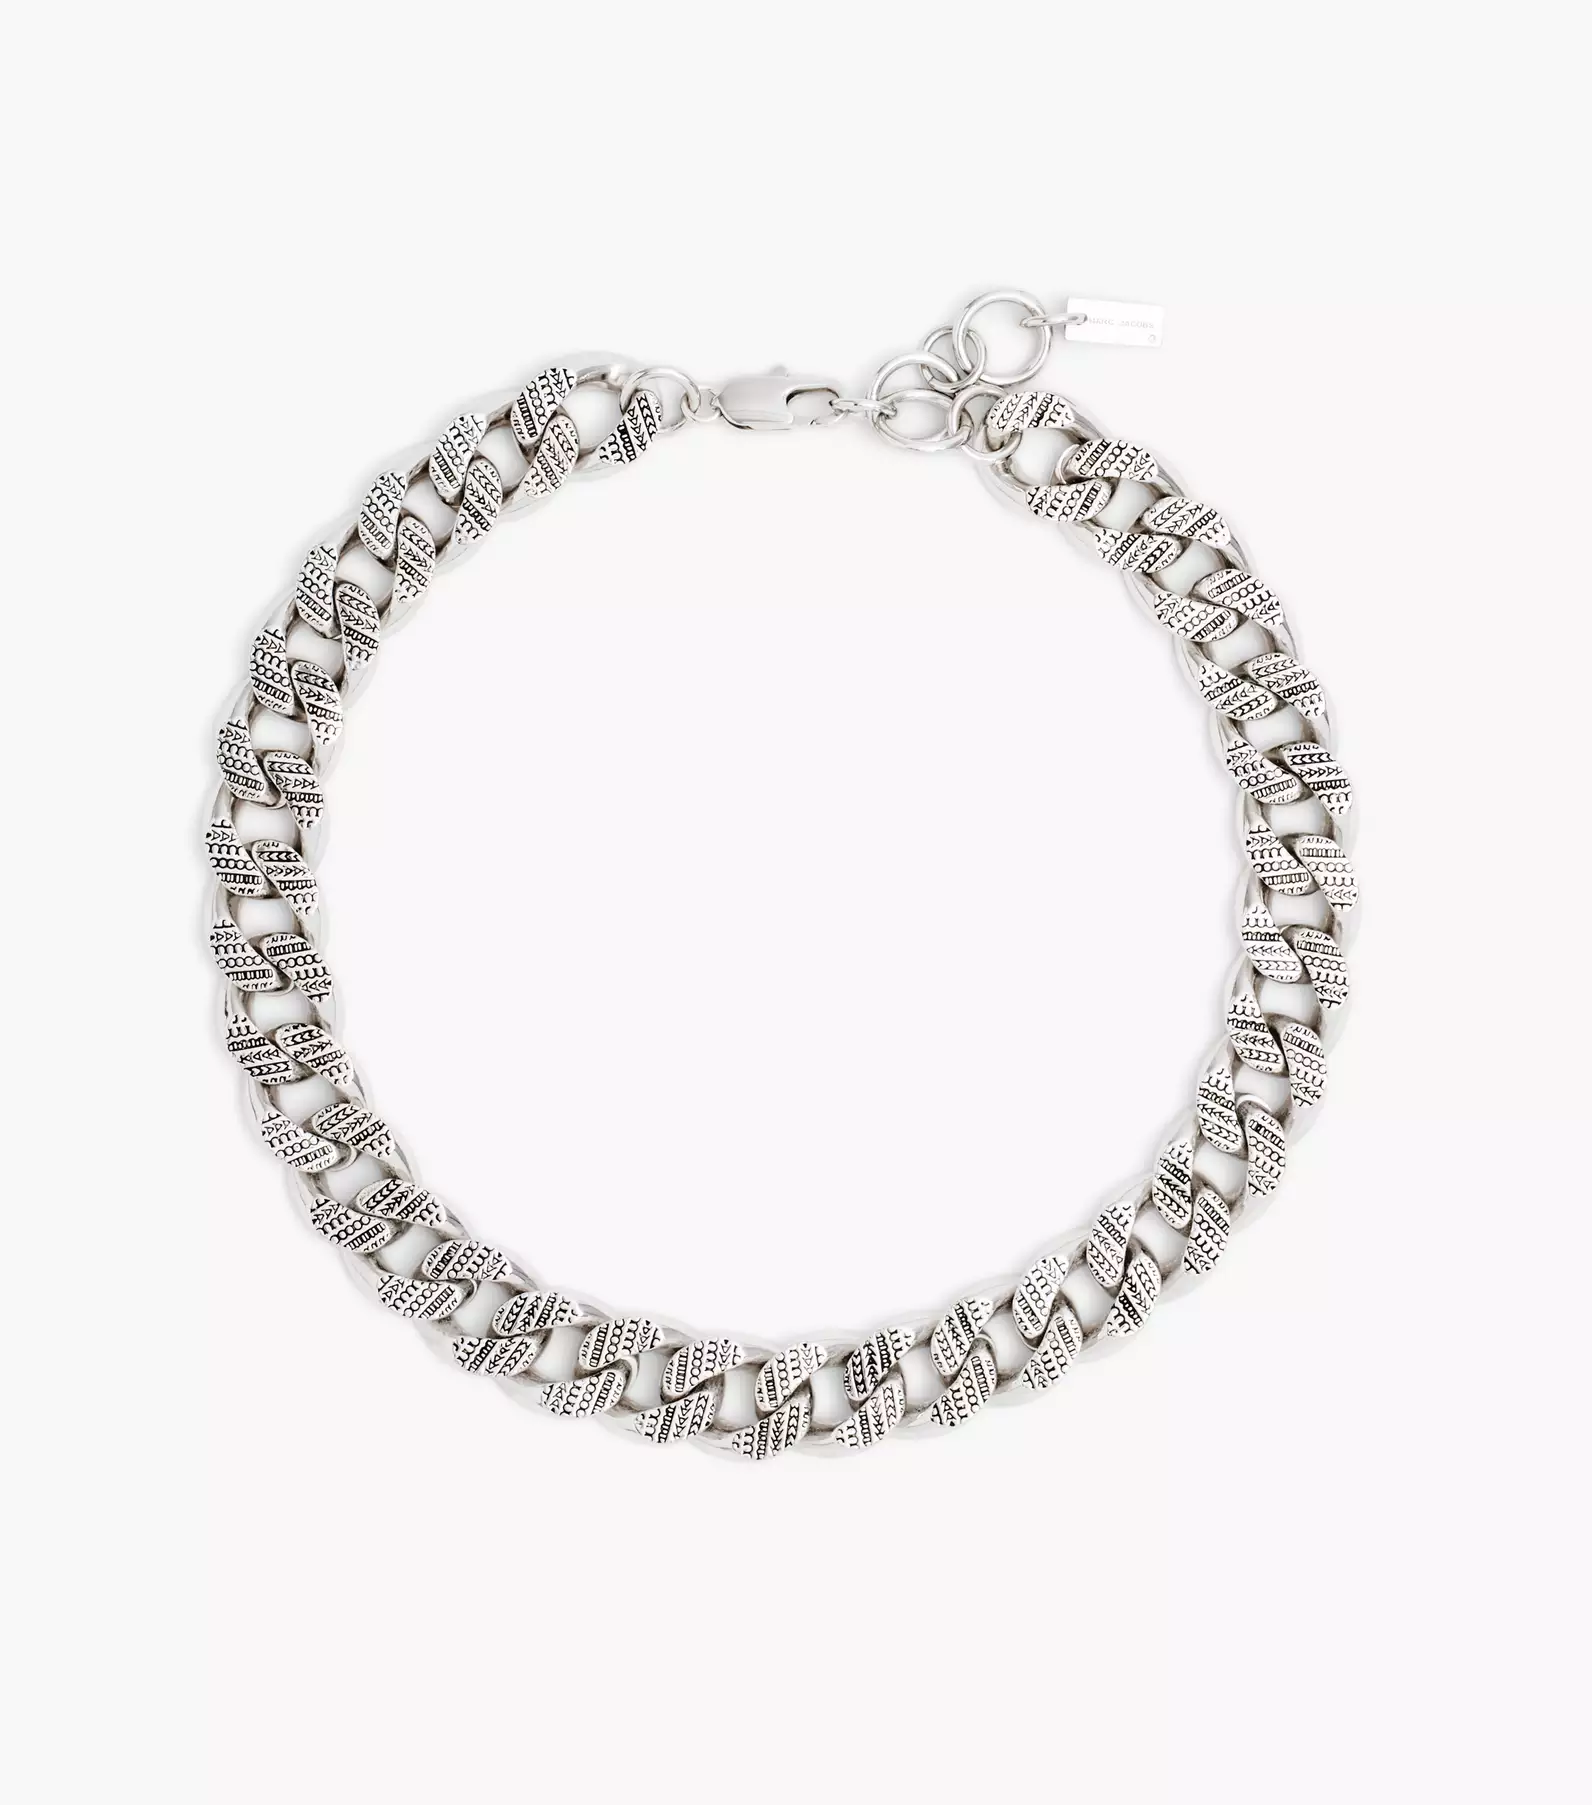 The Monogram Ball Chain Bracelet, Marc Jacobs